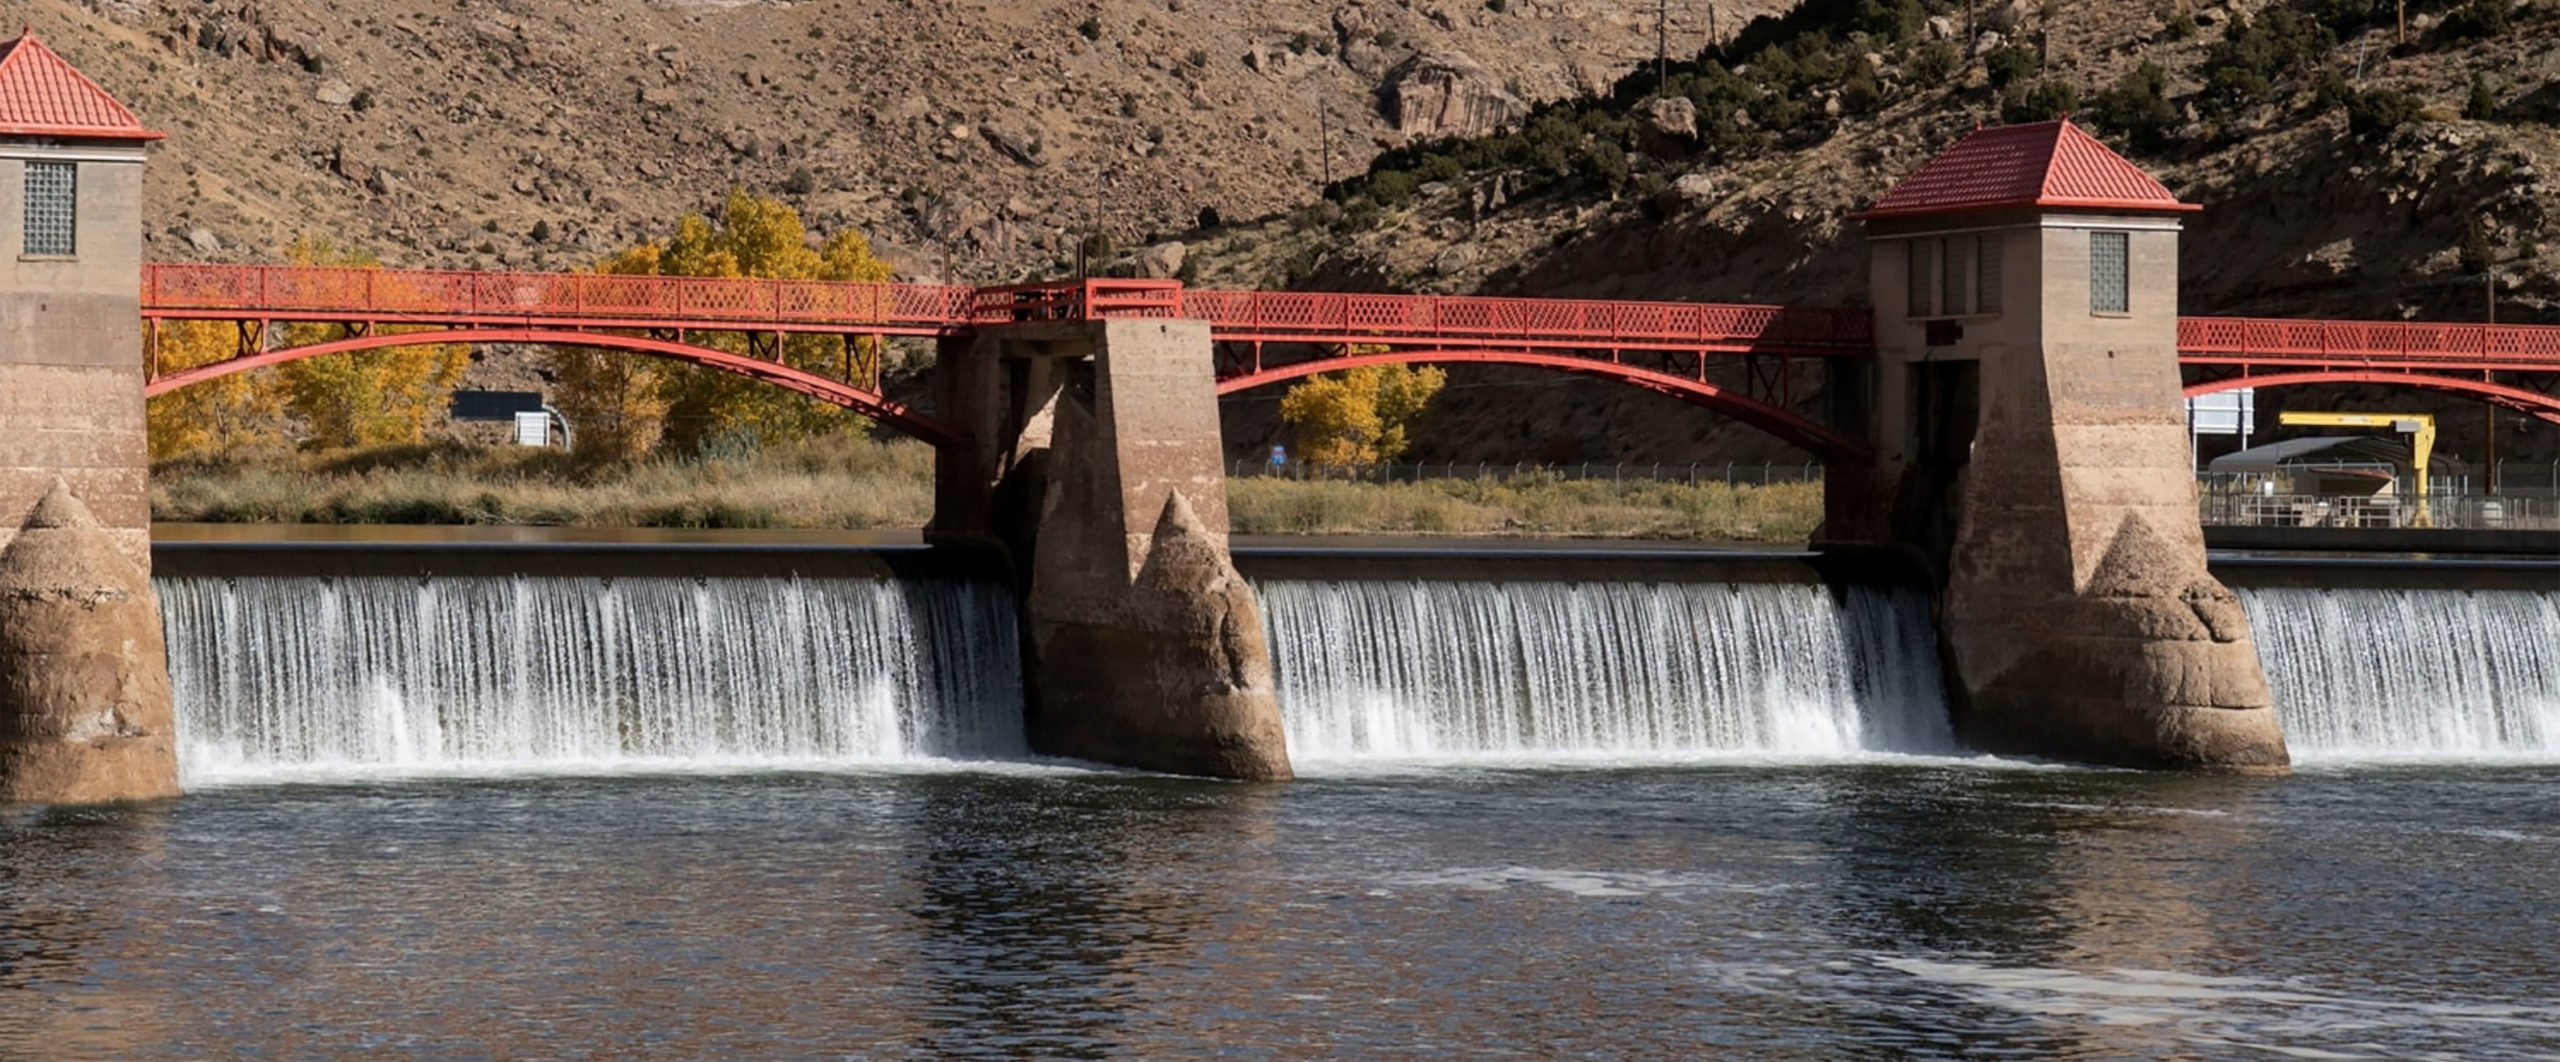 Colorado Water Infrastructure